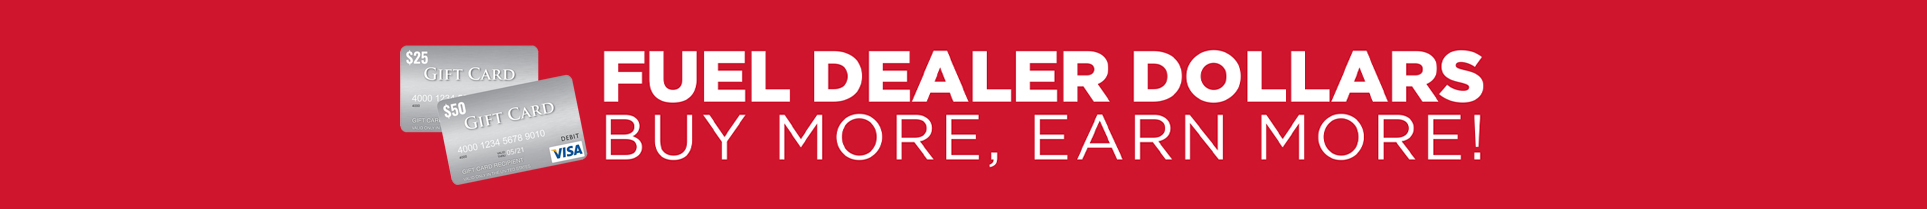 Fuel Dealer Dollars: Buy More, Earn More!